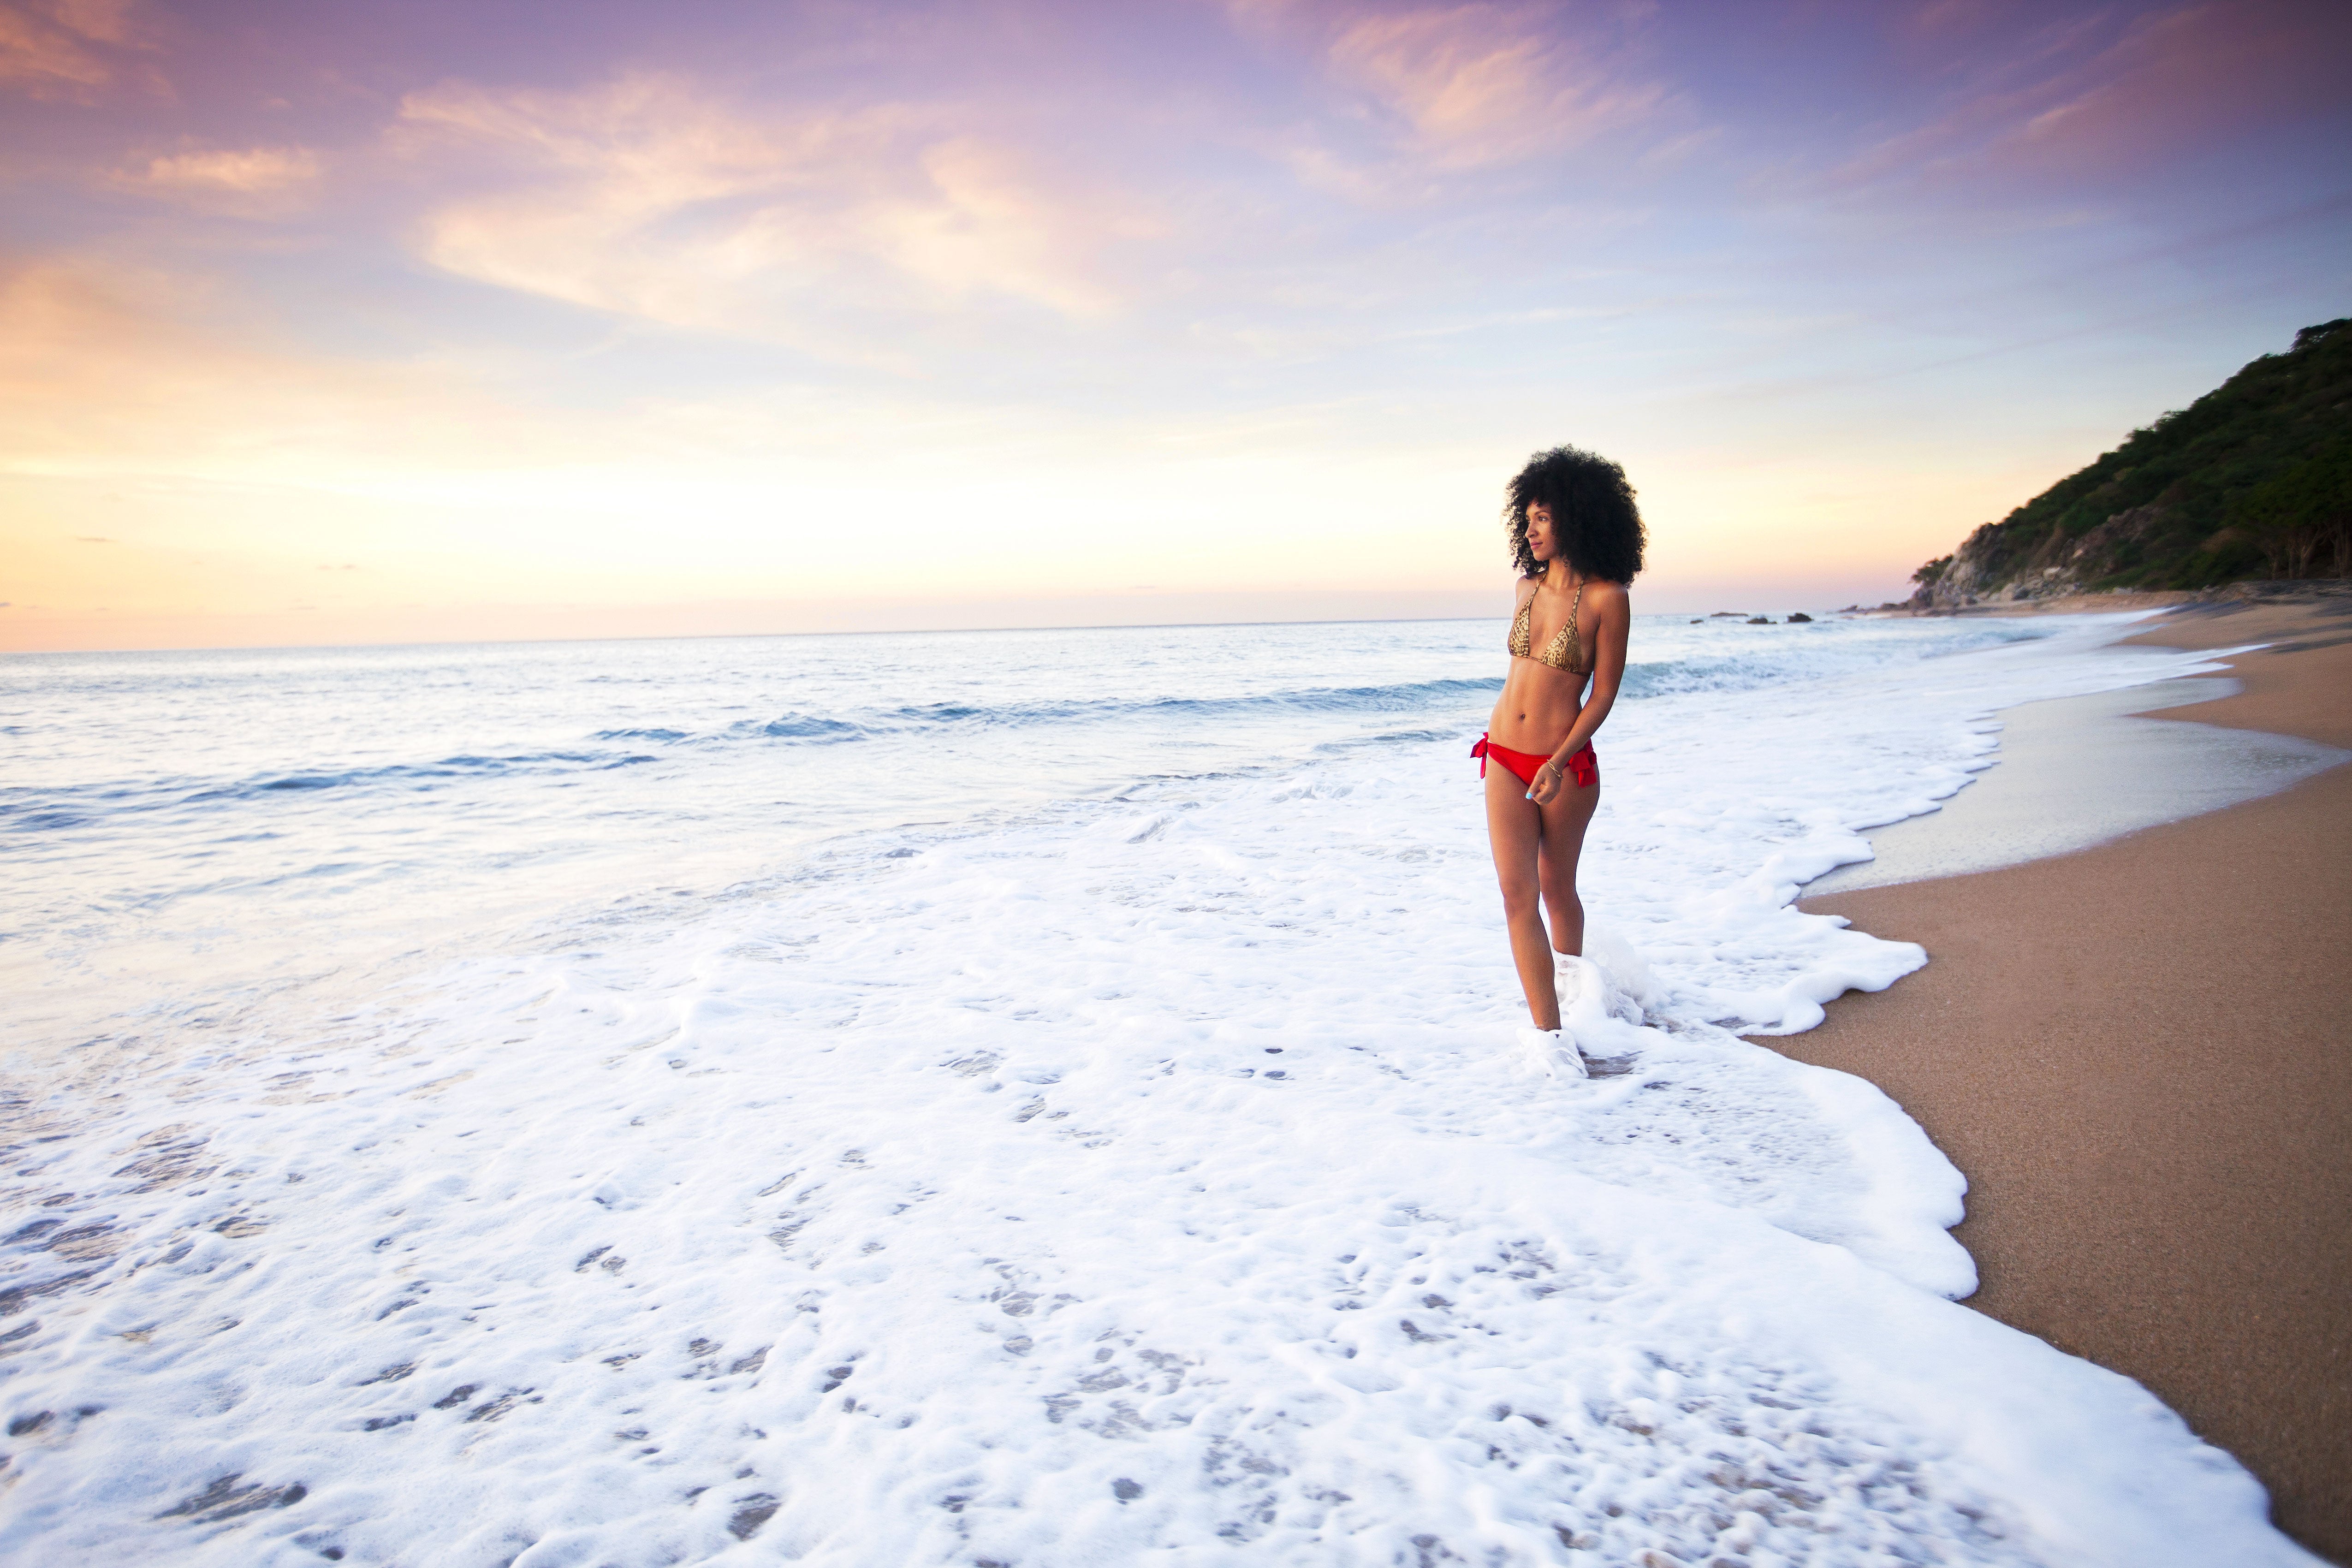 The Best Beaches For Black Women
